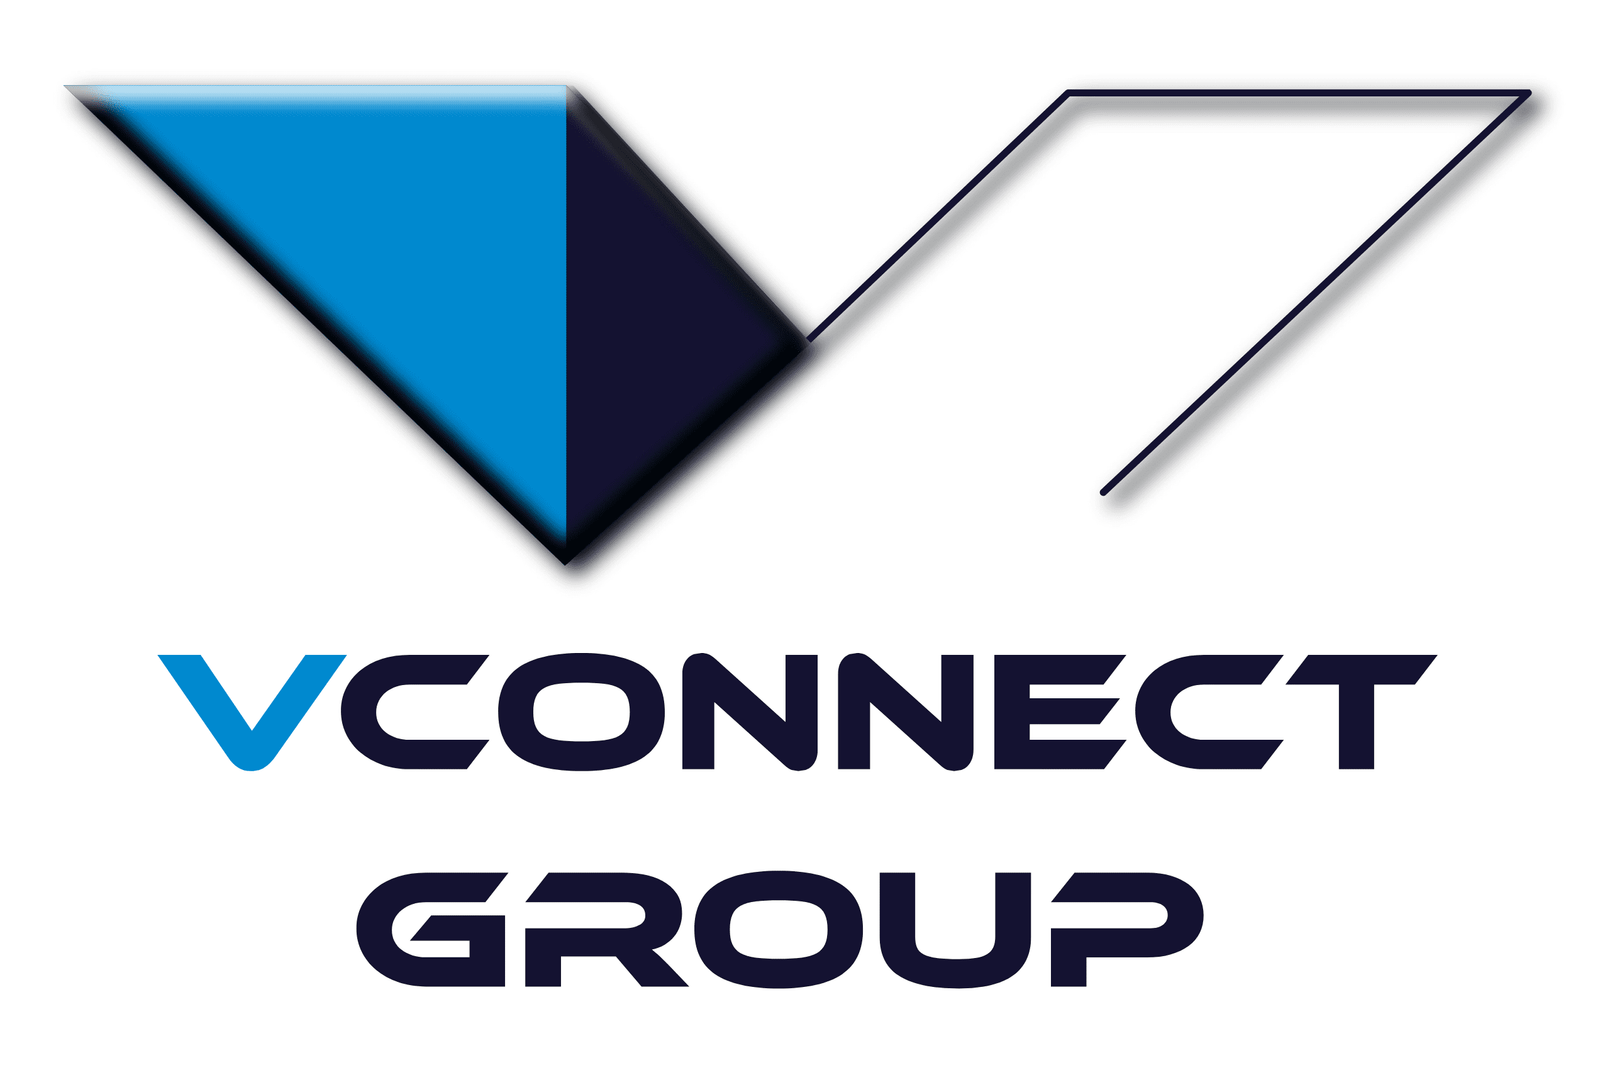 Company Insight – Vconnect